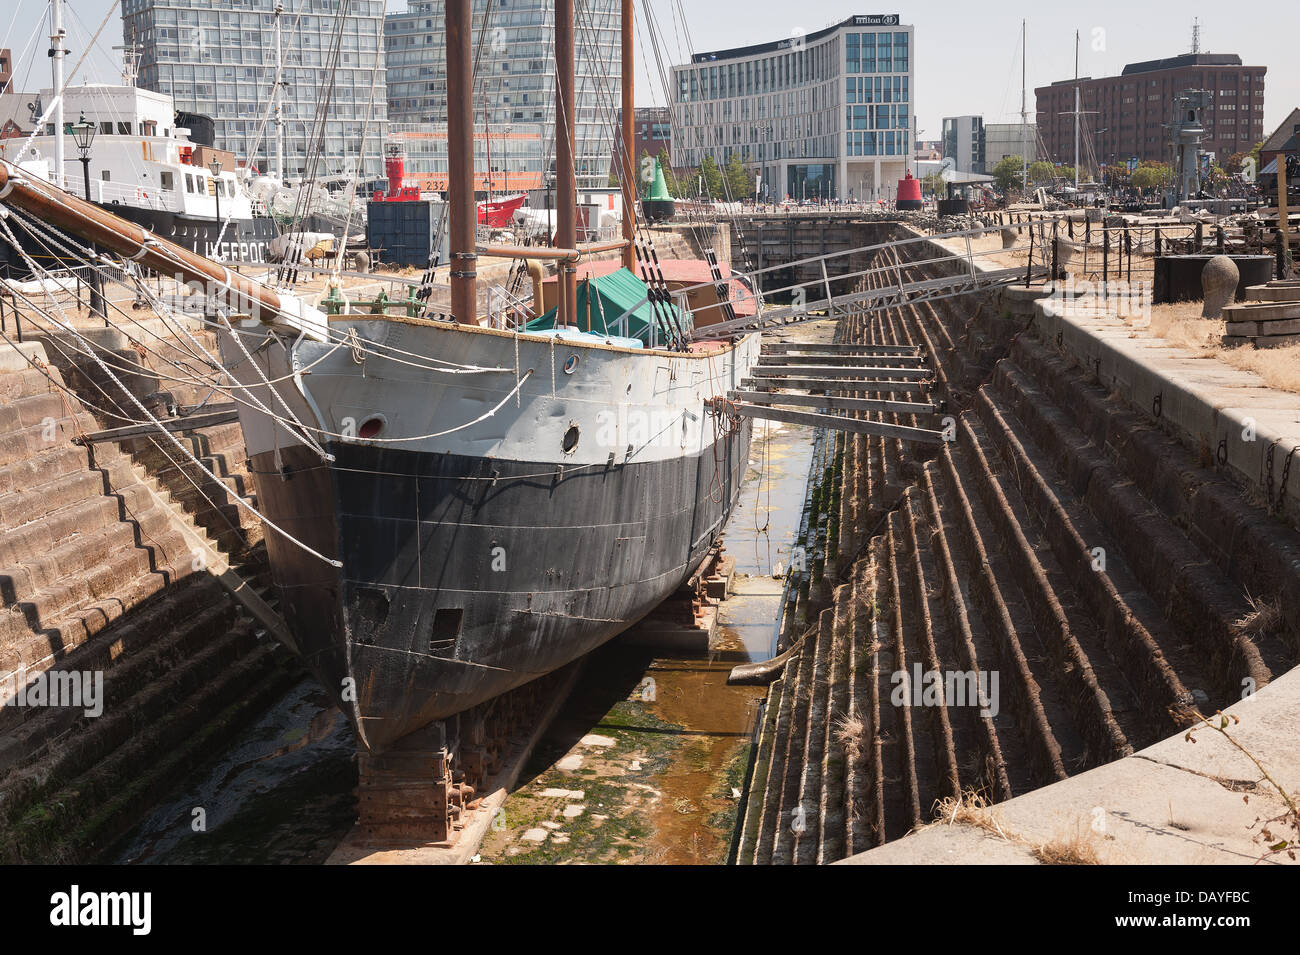 Das De Wadden Handel Segelschiff Boot in Canning trockenen Dock gegen moderne neu-Skyline ältere traditionelle Vergangenheit kontrastiert Stockfoto